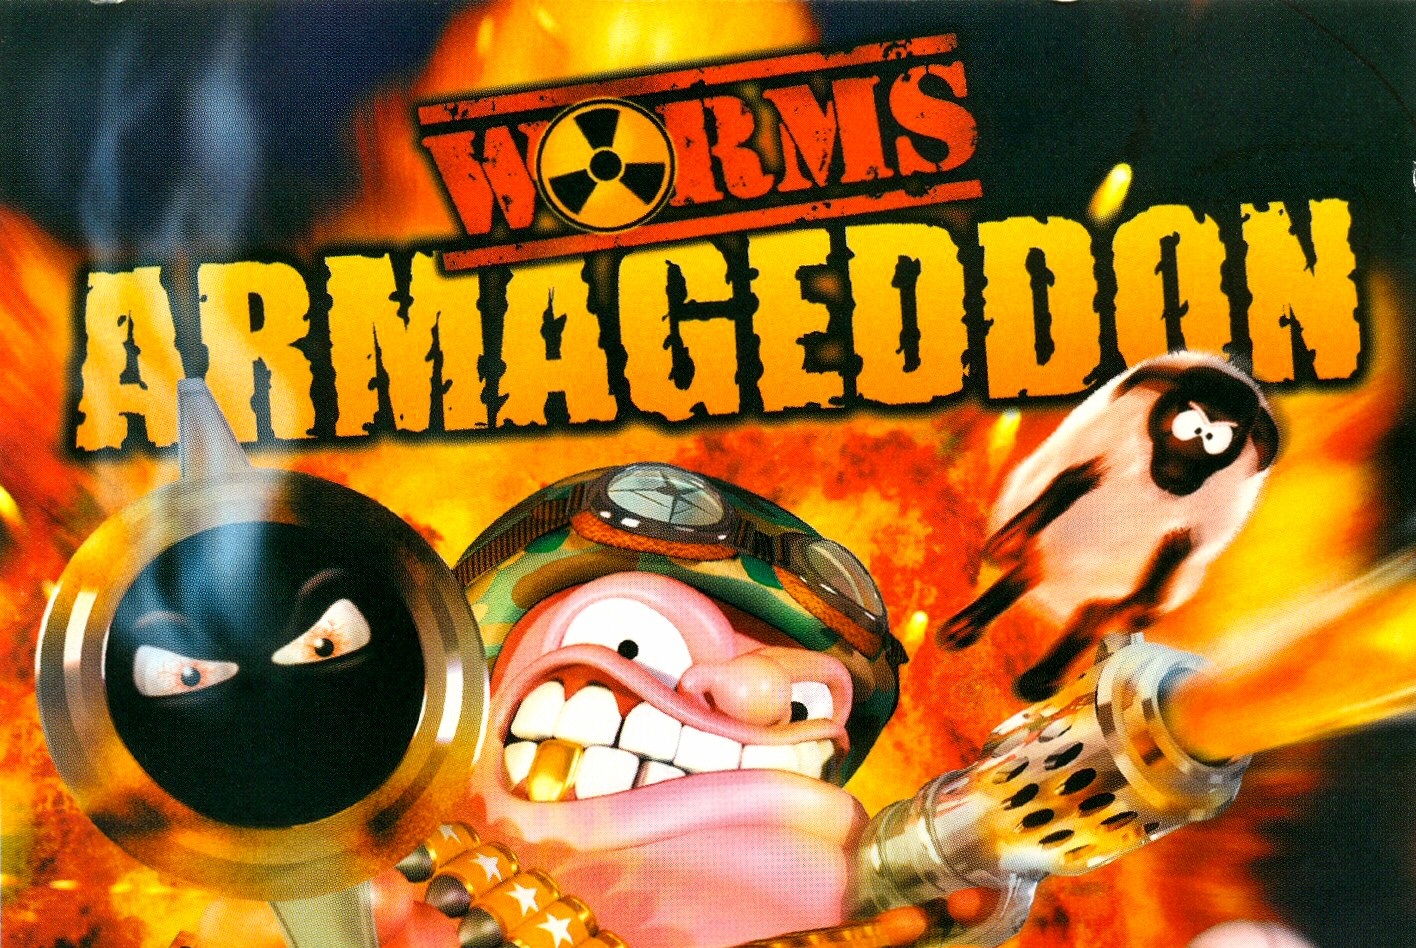 worms armageddon torrent download